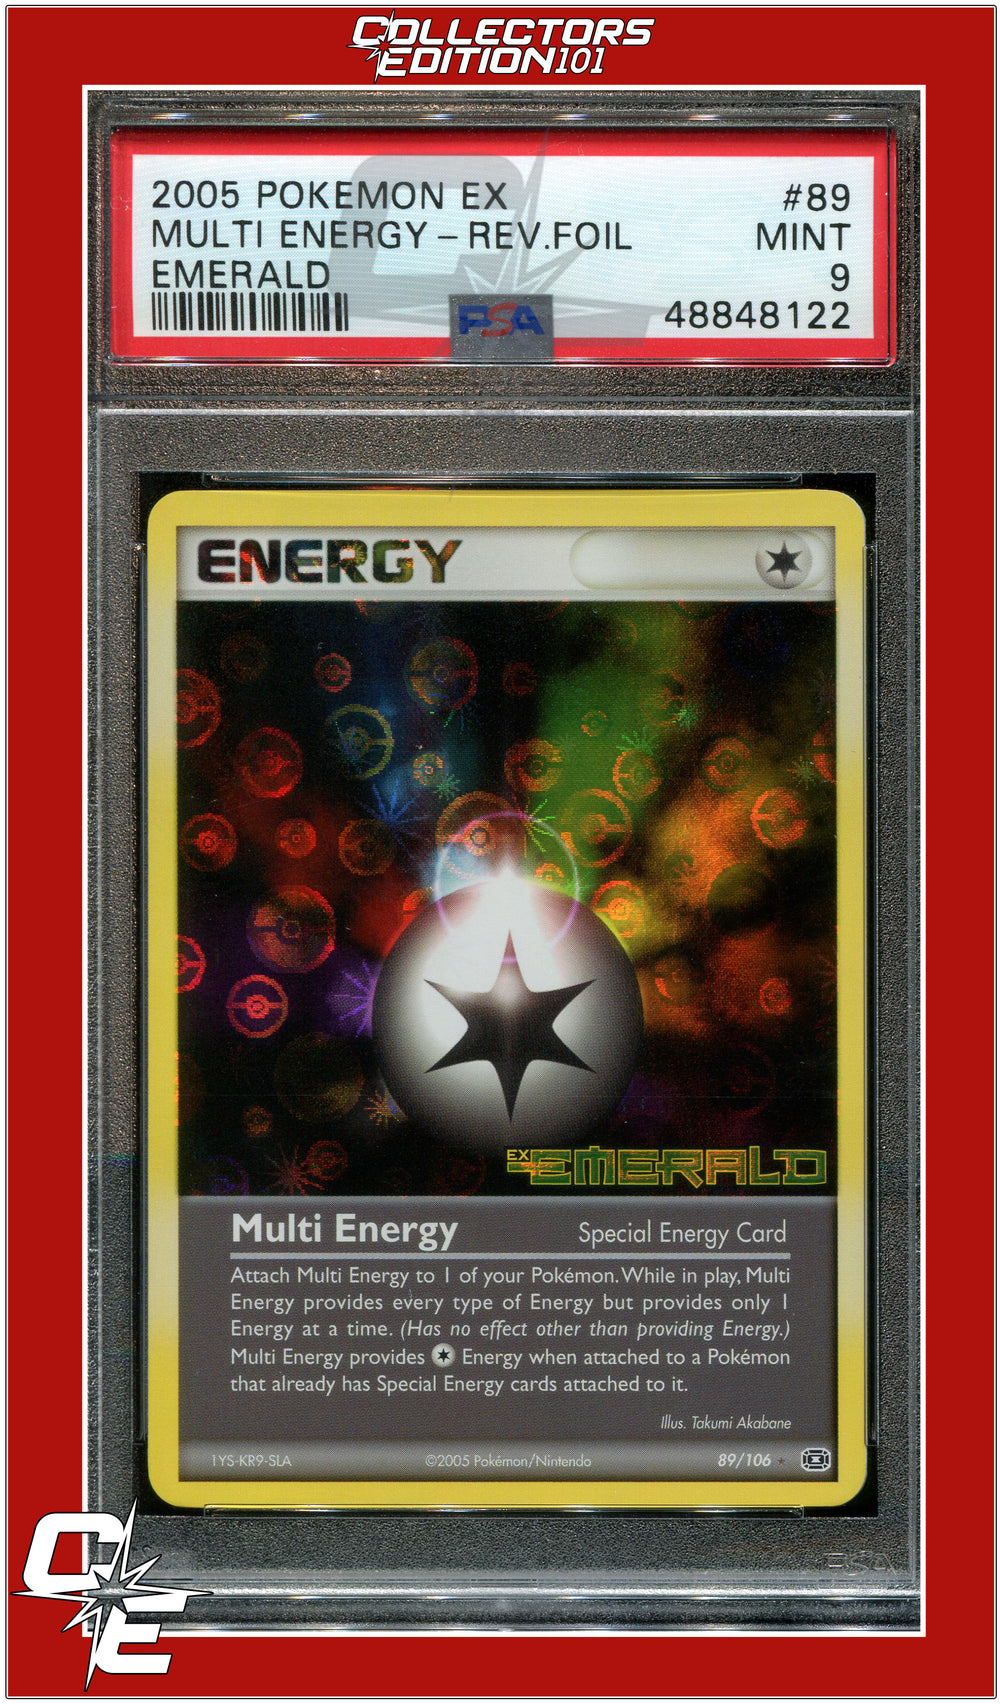 EX Emerald 89 Multi Energy Reverse Foil PSA 9